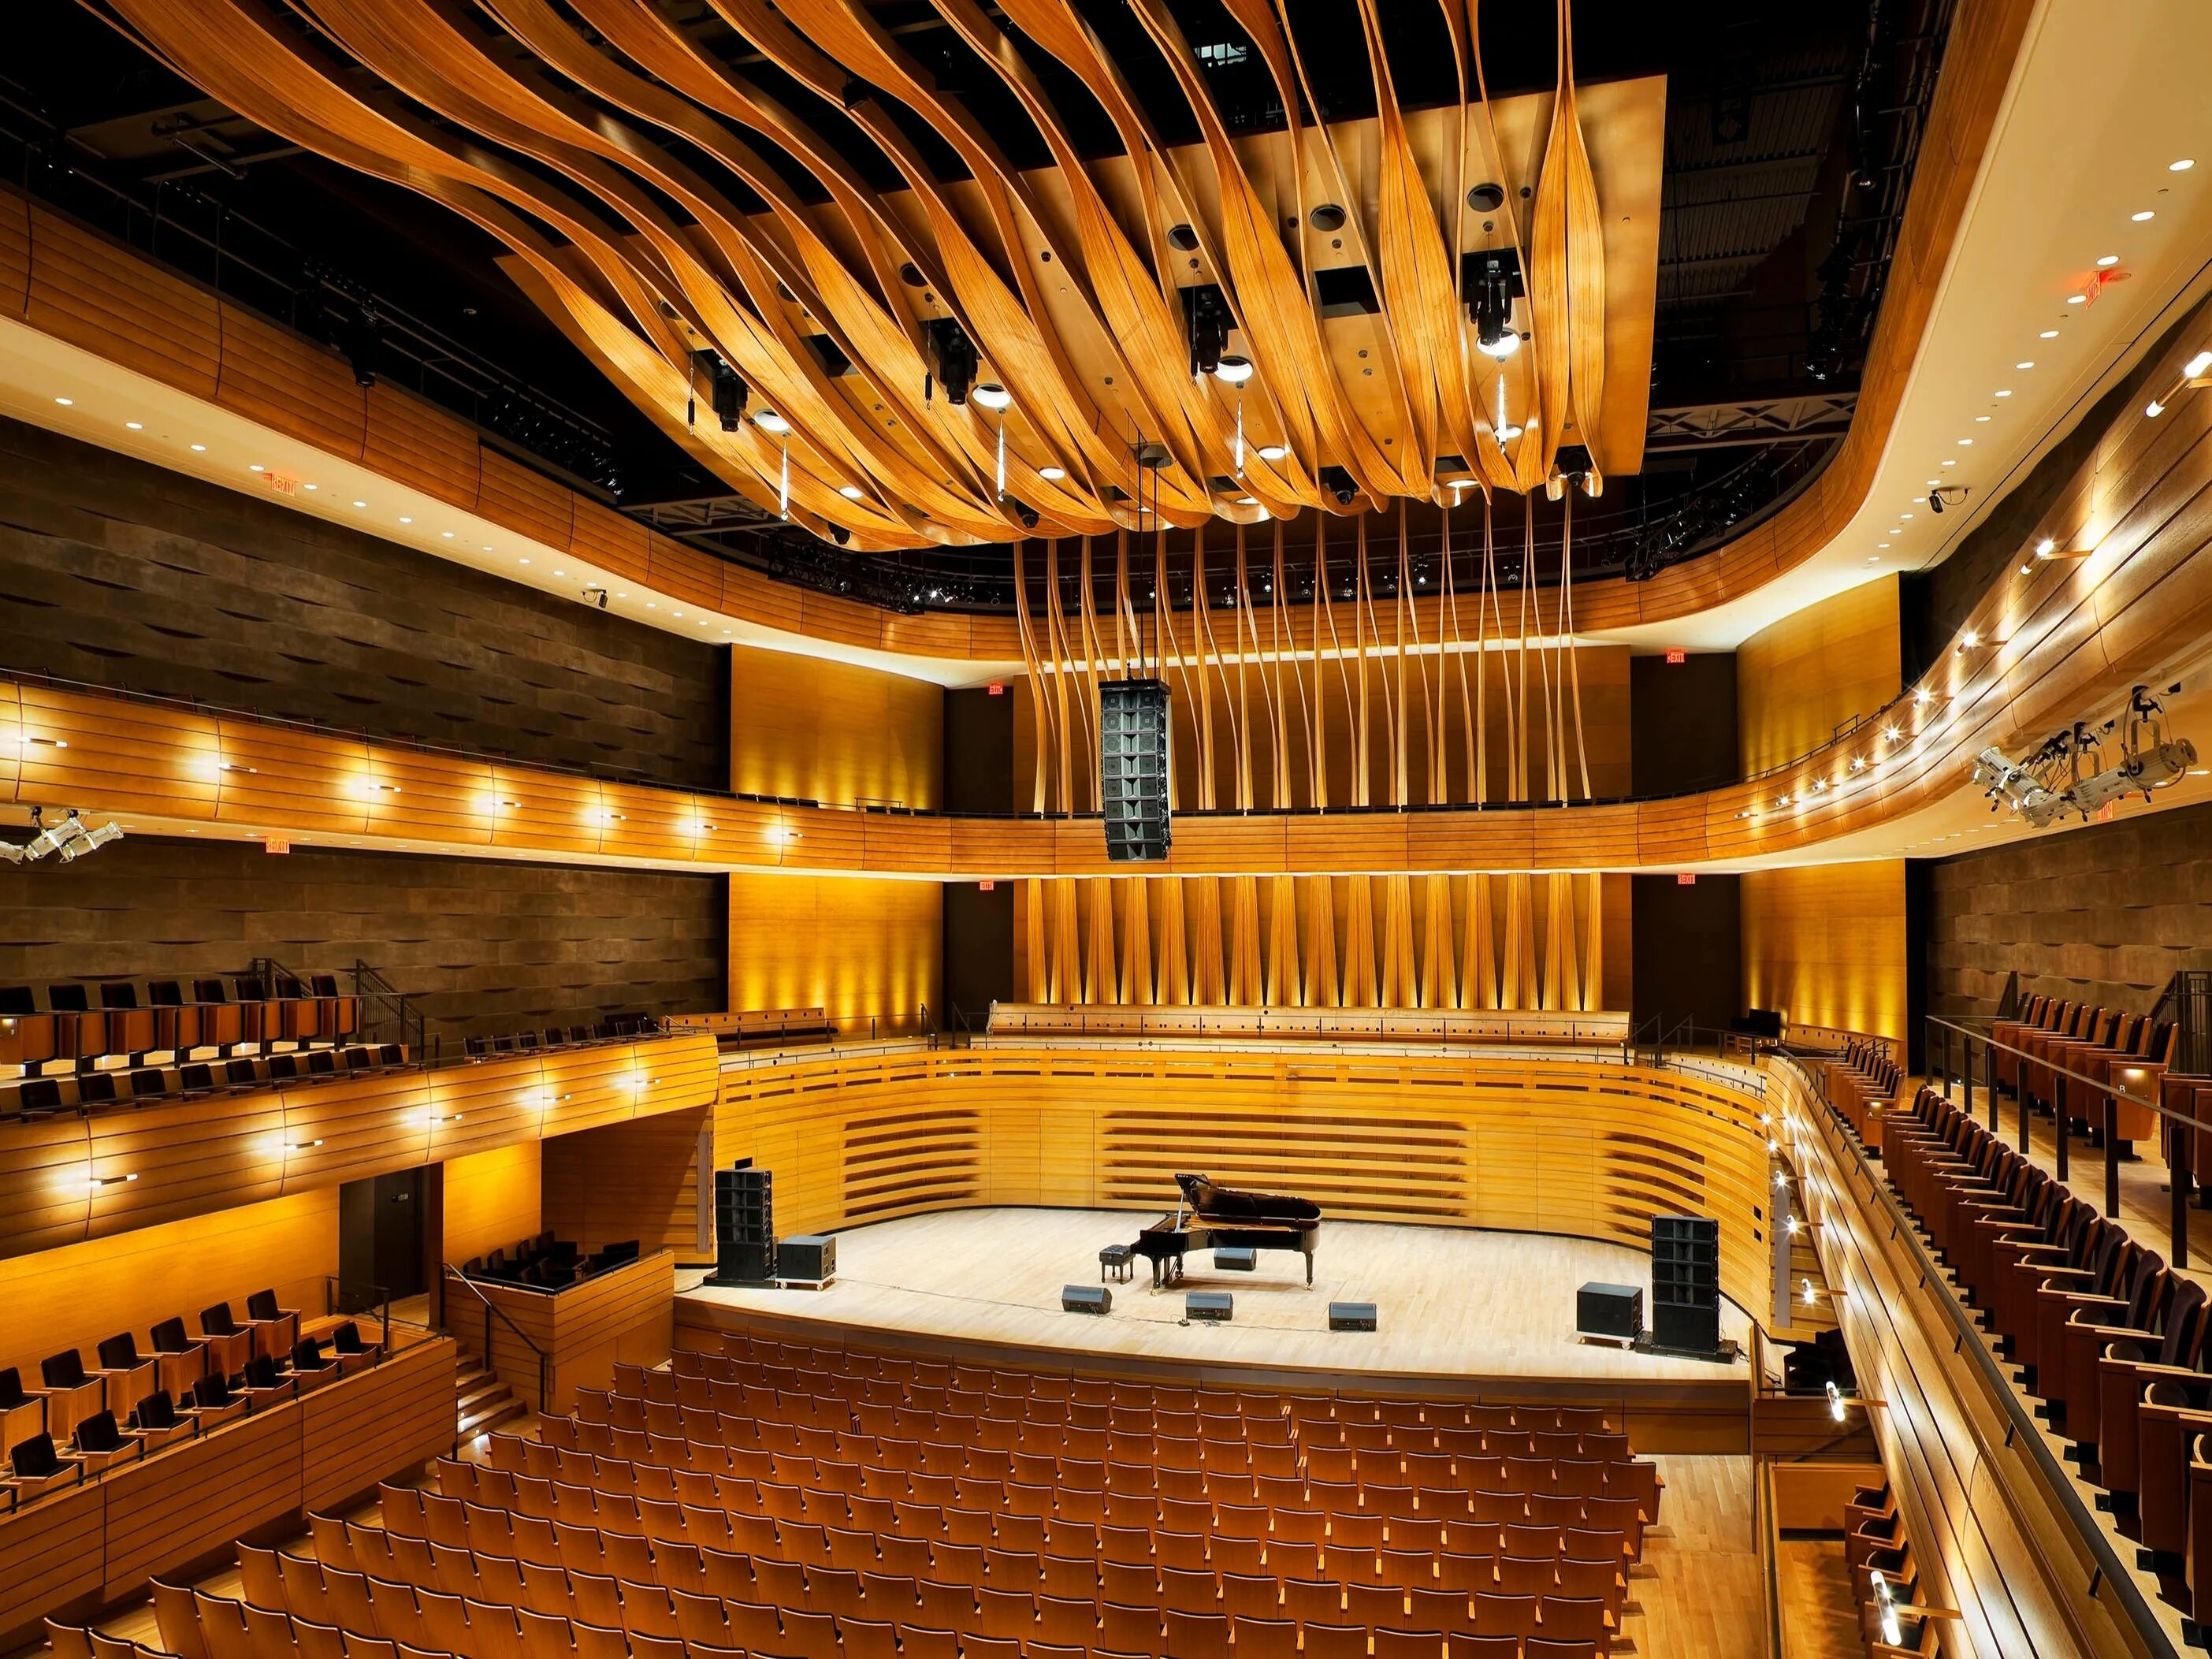 Hall world. Koerner Hall, Royal Conservatory of Music зал. Концертный зал Торонто. Королевская музыкальная консерватория Торонто. Концертный зал Concert Hall.